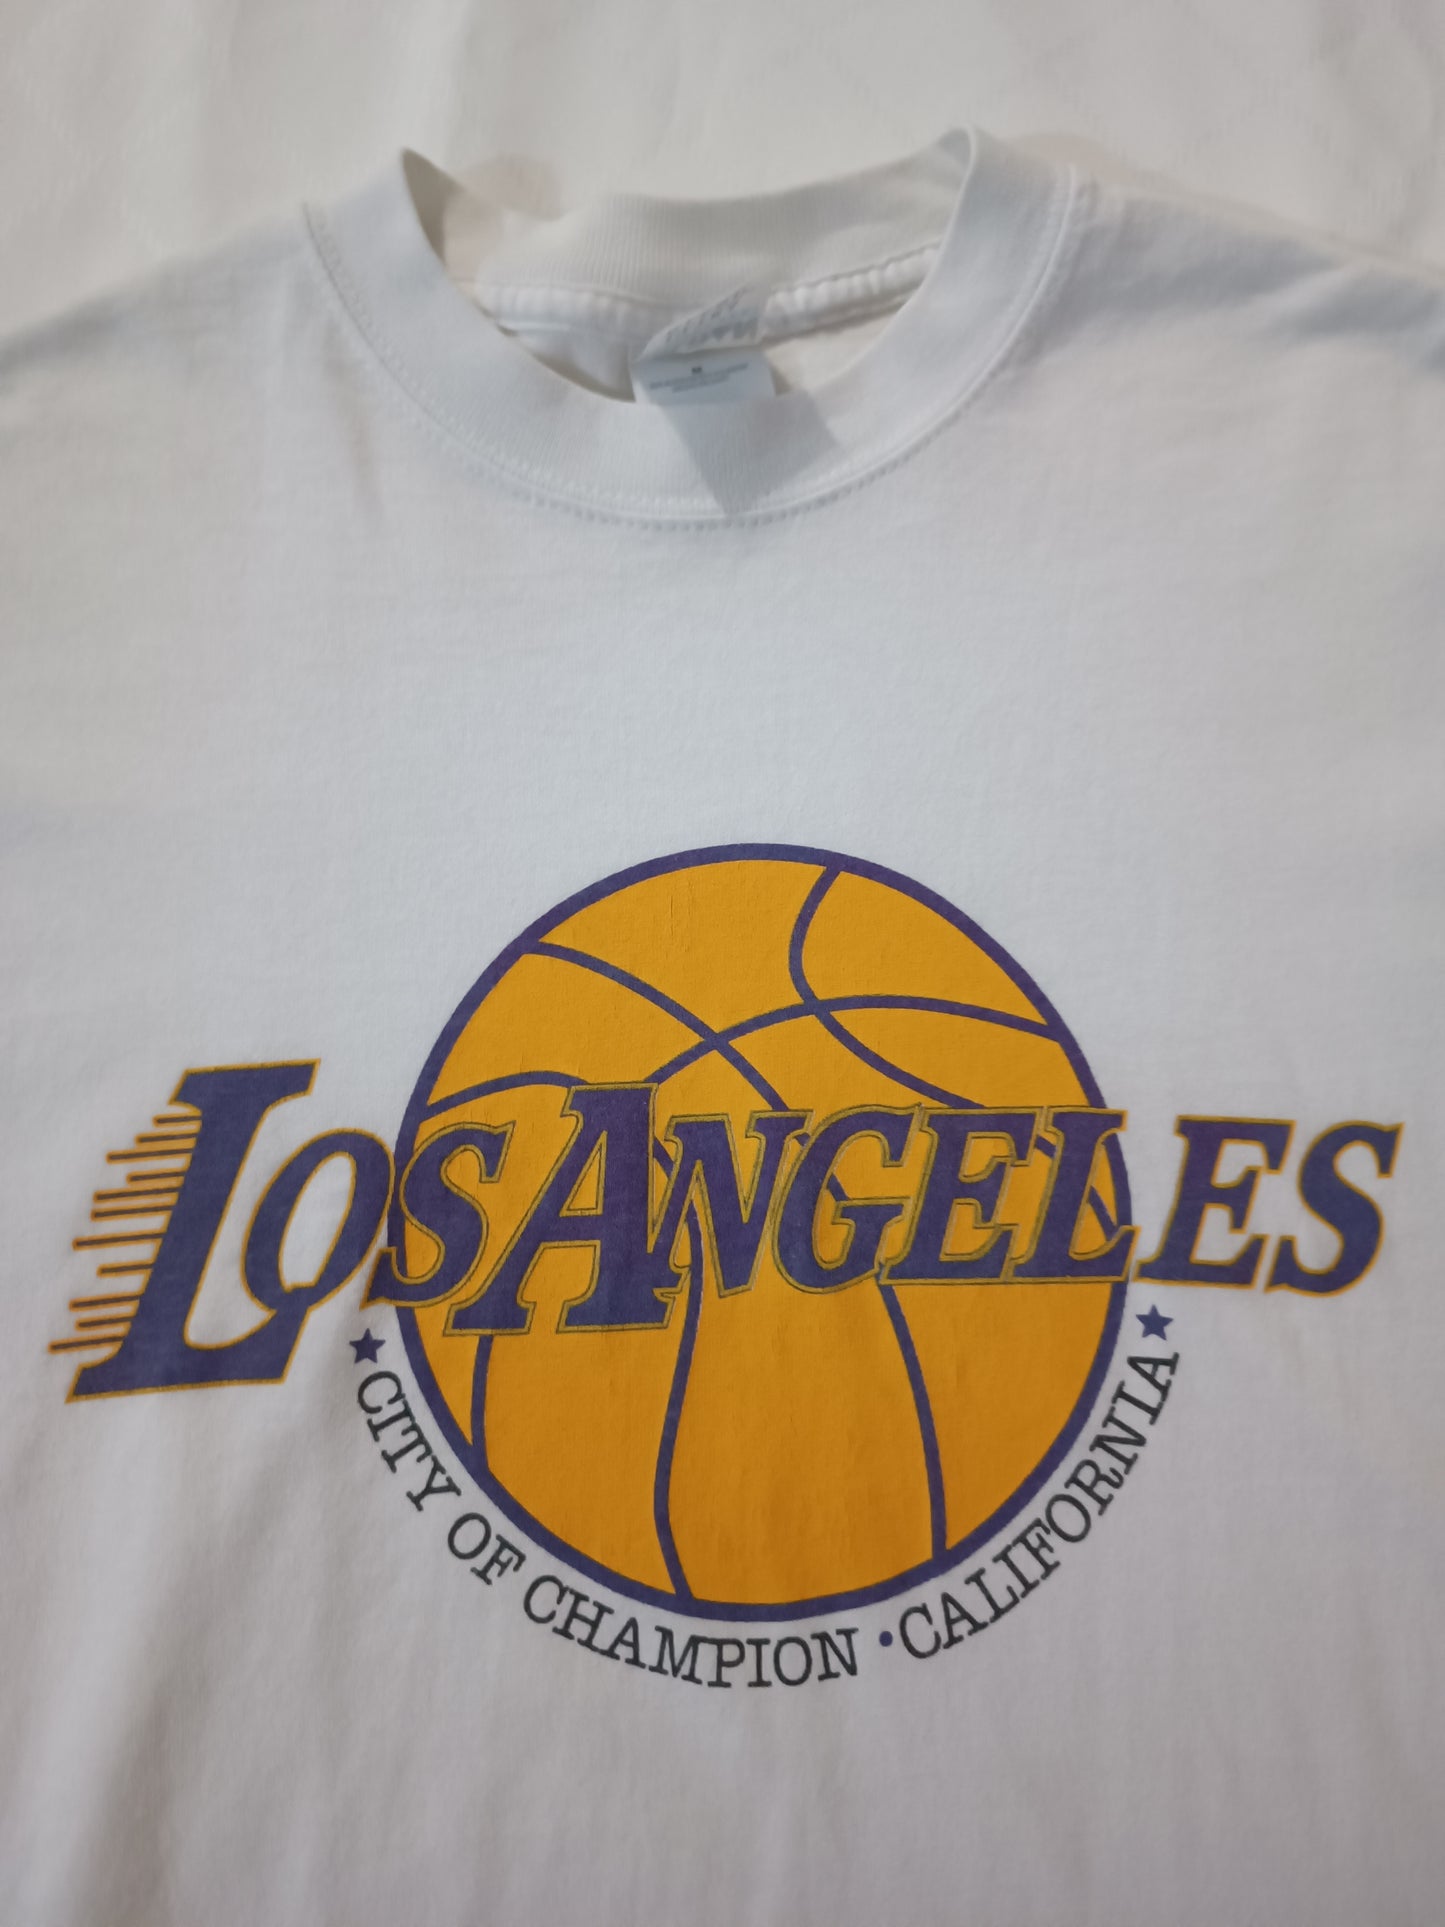 Los Angeles Lakers - M